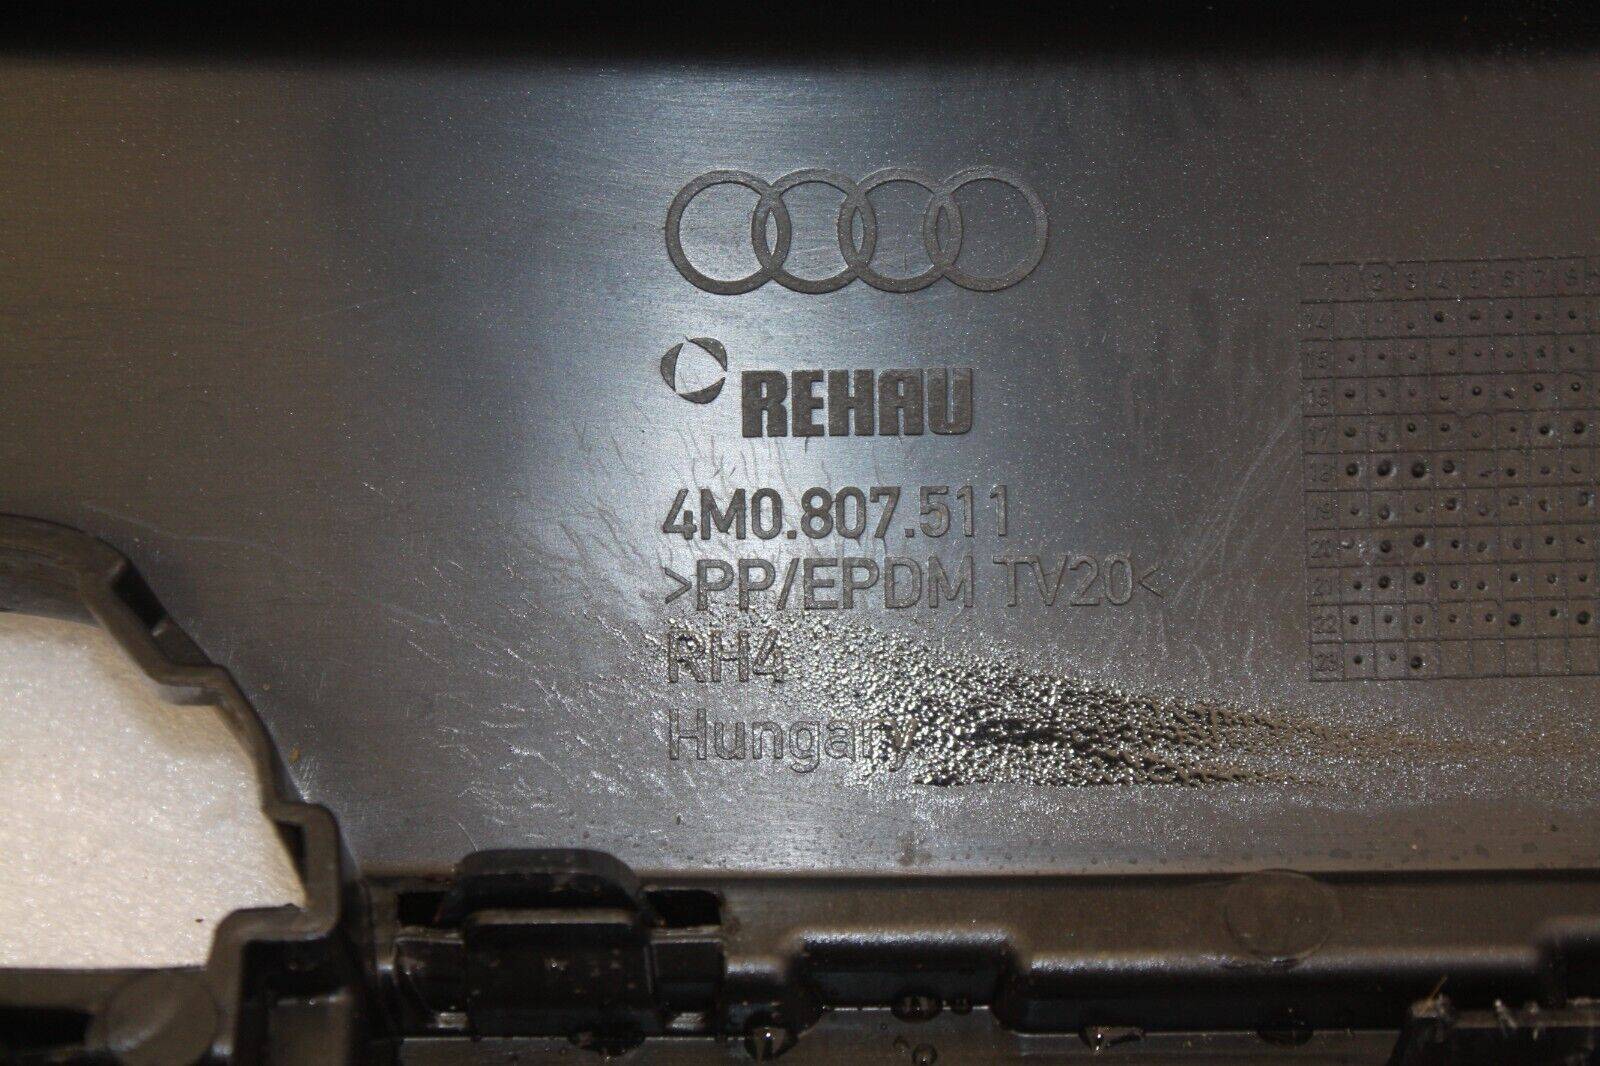 Audi-Q7-S-Line-Rear-Bumper-2015-TO-2019-4M0807511-Genuine-176220604761-16